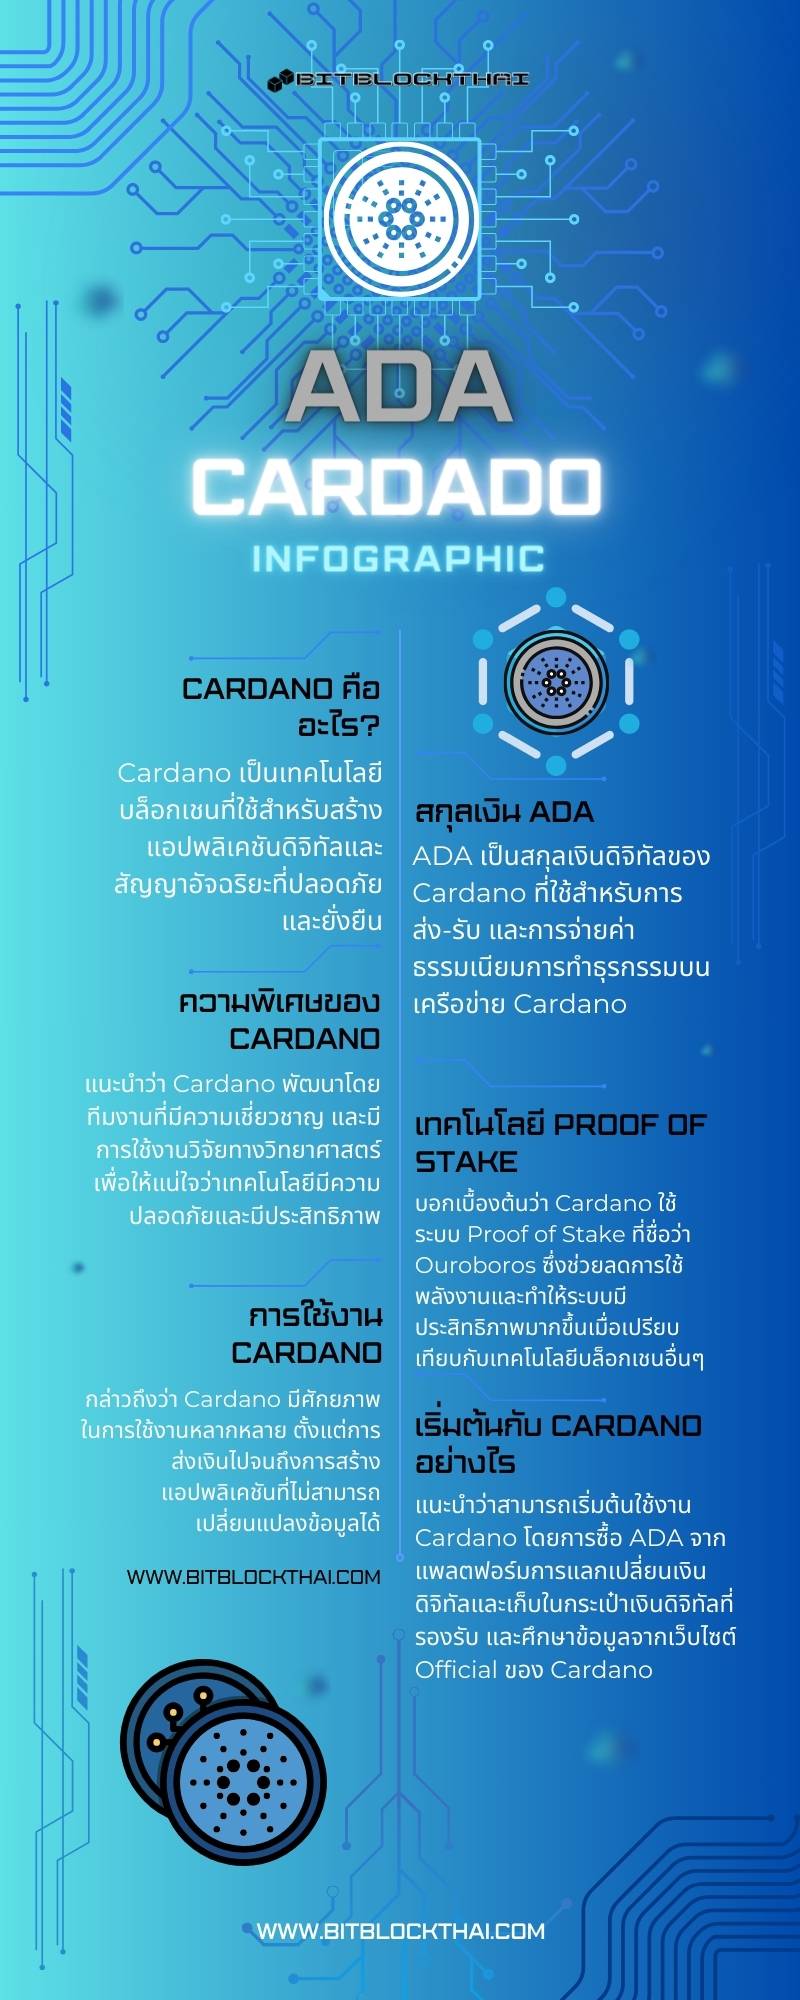 cardano ada infographic thai